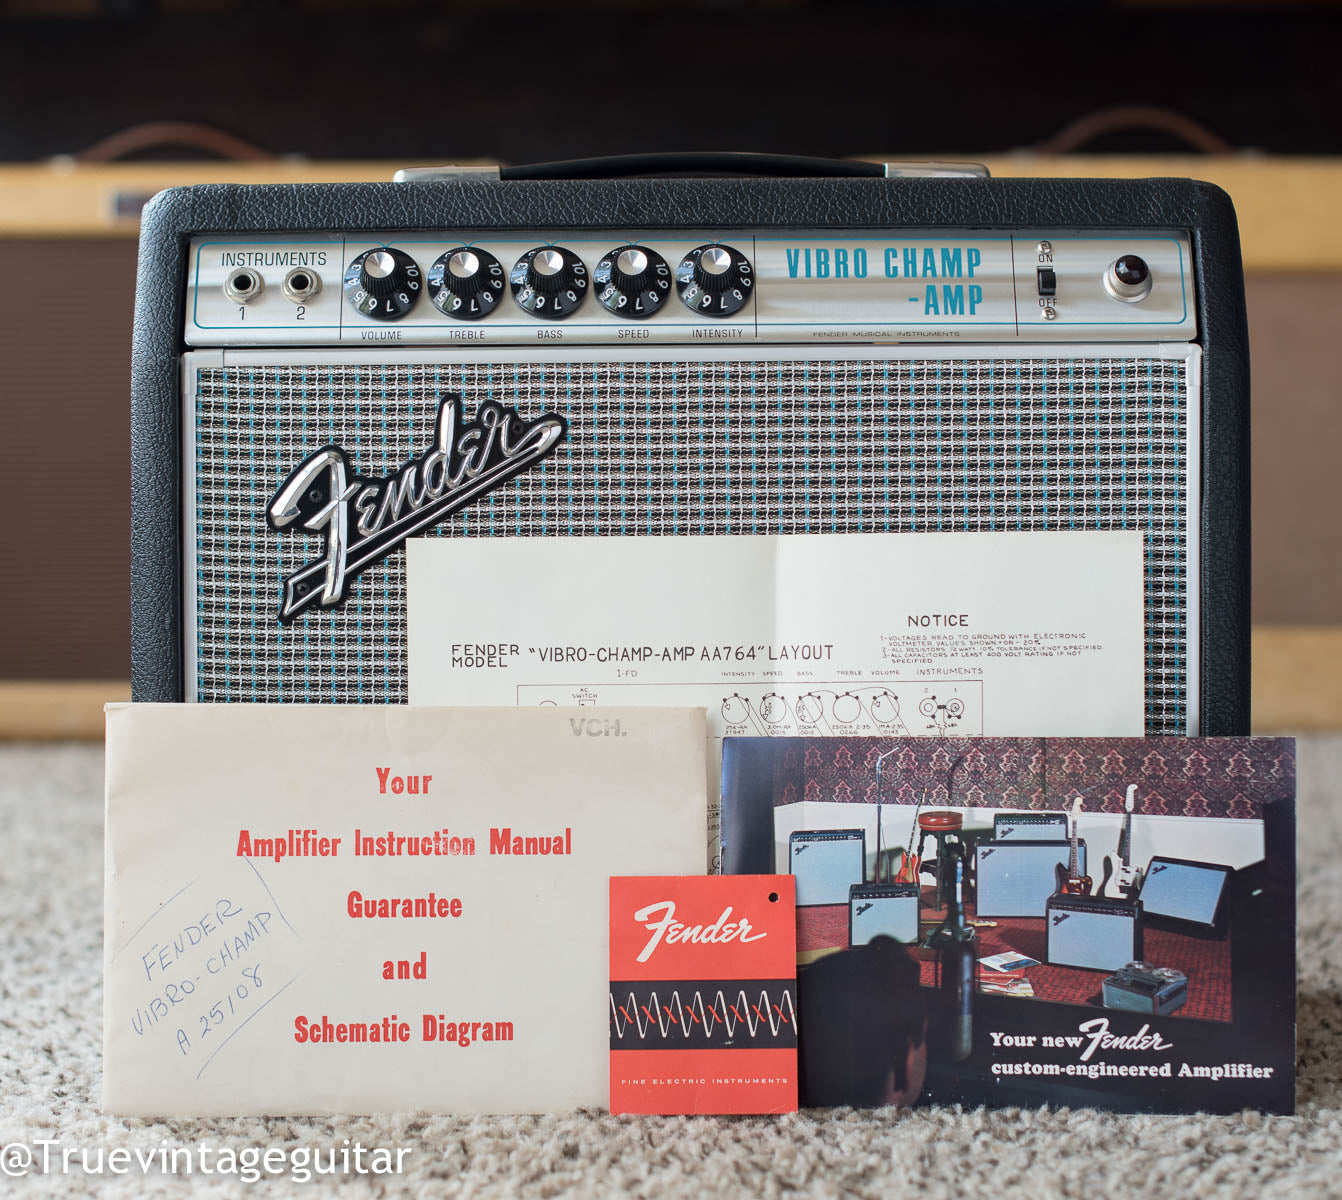 Original Fender amplifier instruction manual, schematic, Tolex tag, 1968 Fender Vibro Champ amp